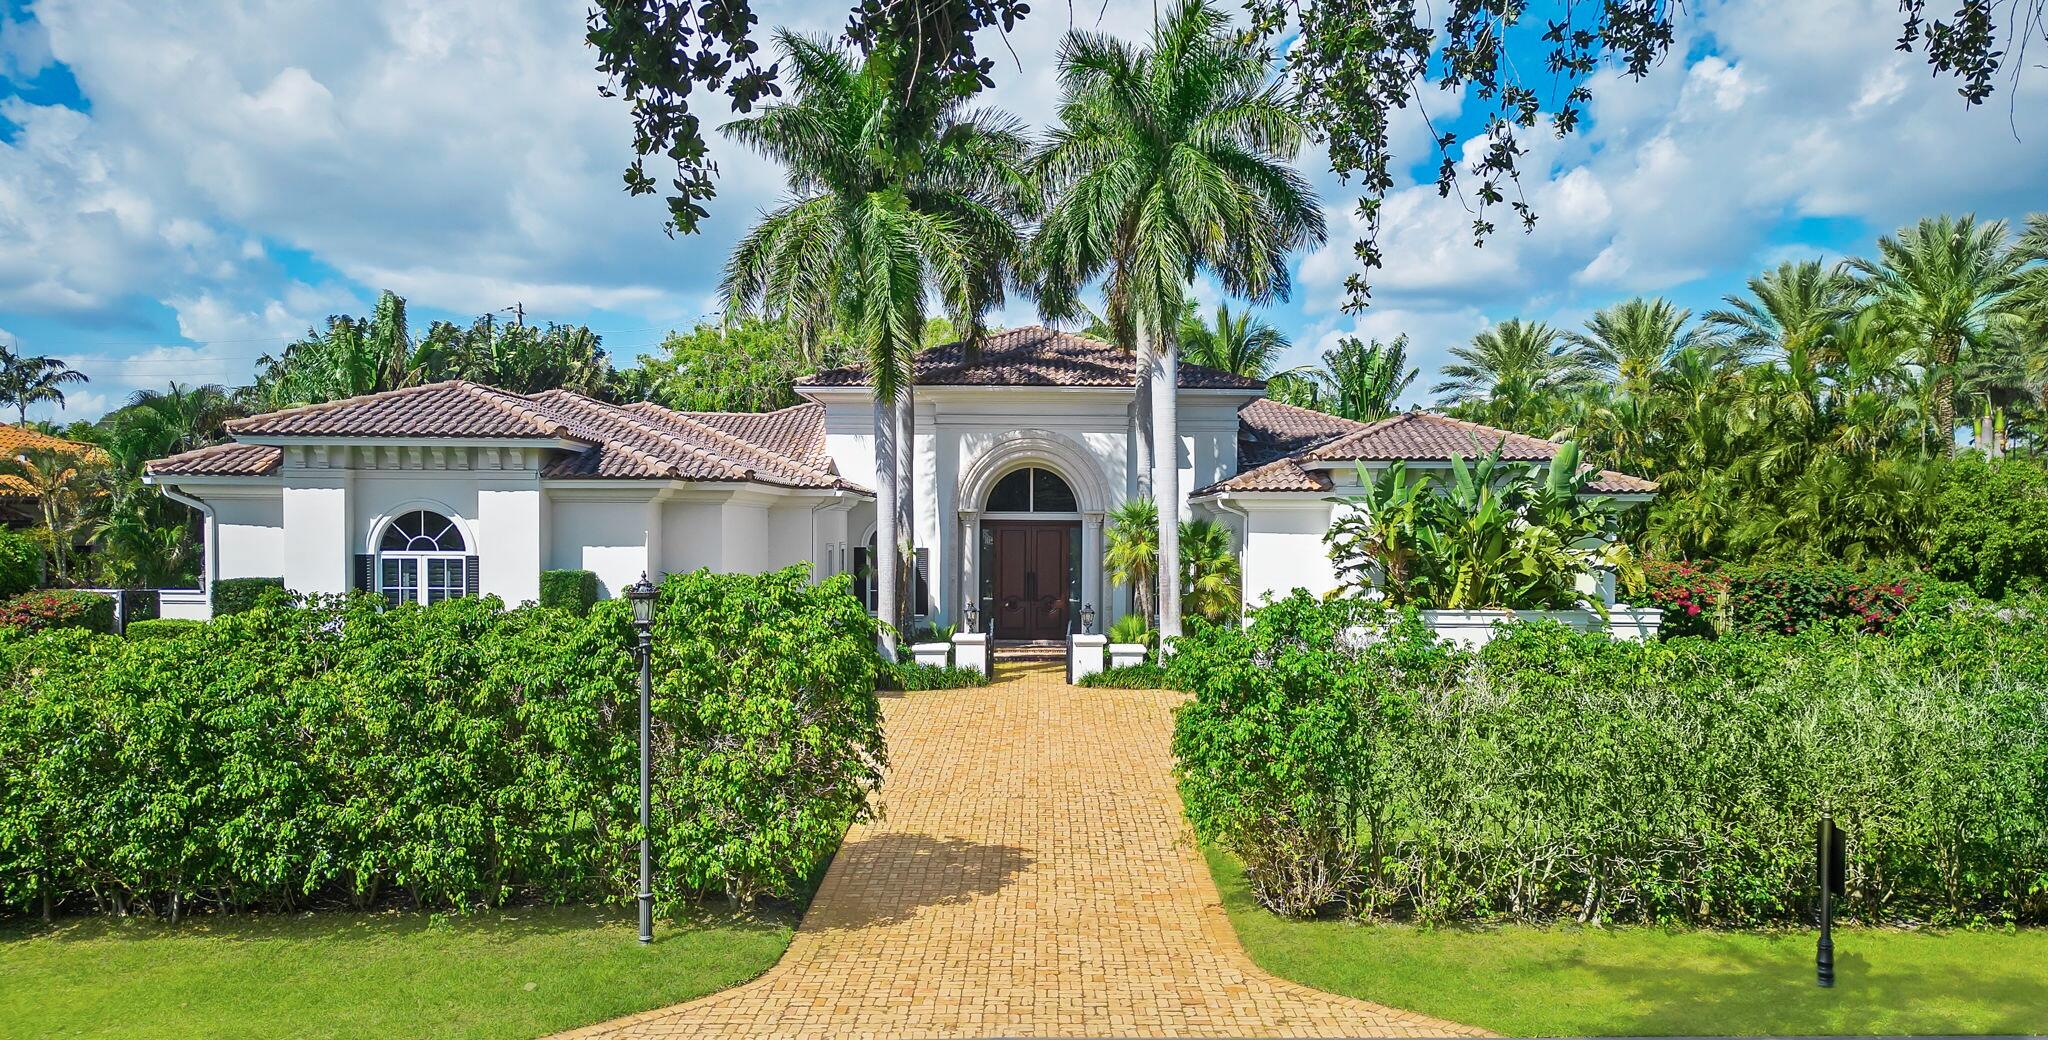 Property for Sale at 4499 Sanctuary Lane, Boca Raton, Palm Beach County, Florida - Bedrooms: 4 
Bathrooms: 4.5  - $6,495,000